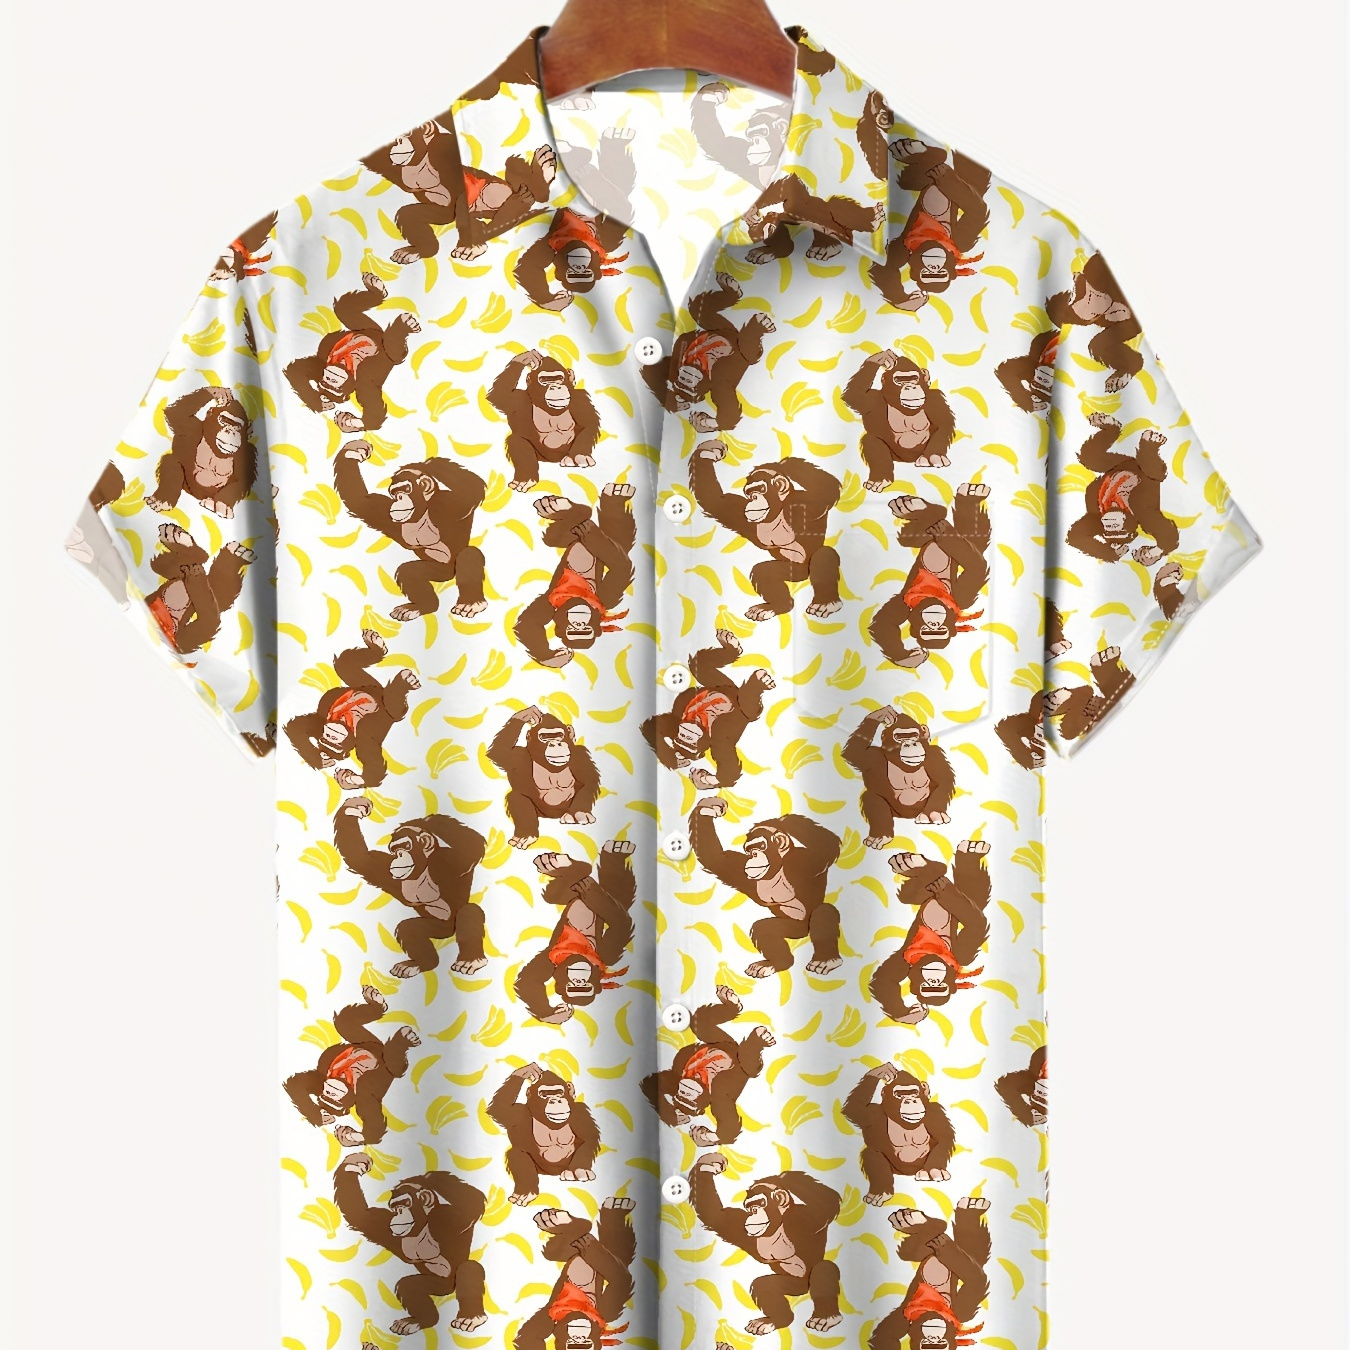 

Men's Monkey Print Shirt, Casual Lapel Button Up Short Sleeve Shirt For Outdoor Activities